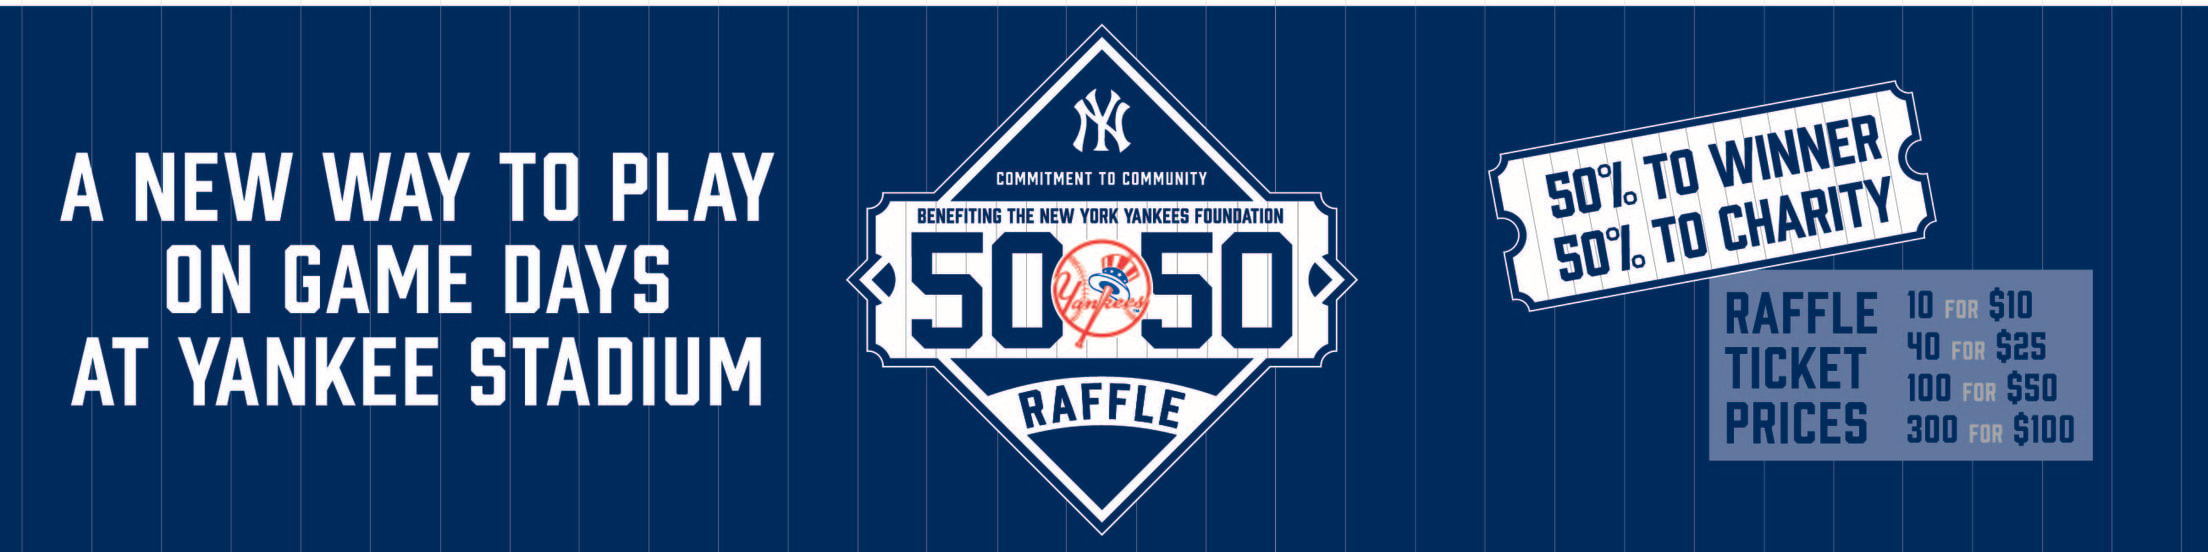 New York Yankees Foundation 50/50 Raffle